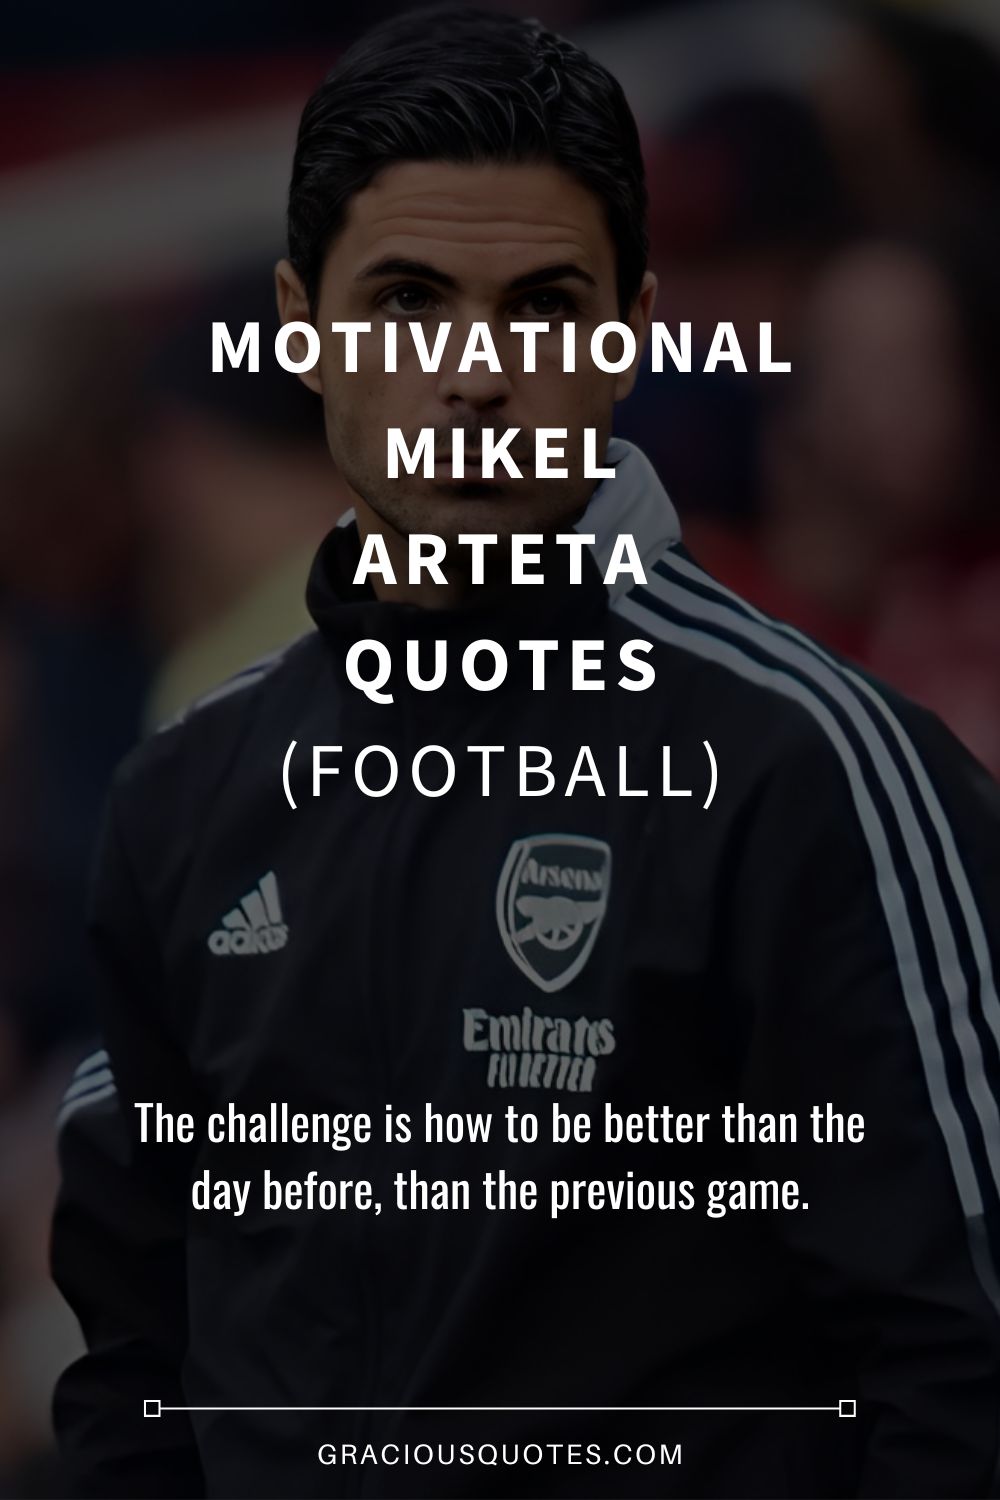 Motivational Mikel Arteta Quotes (FOOTBALL) - Gracious Quotes